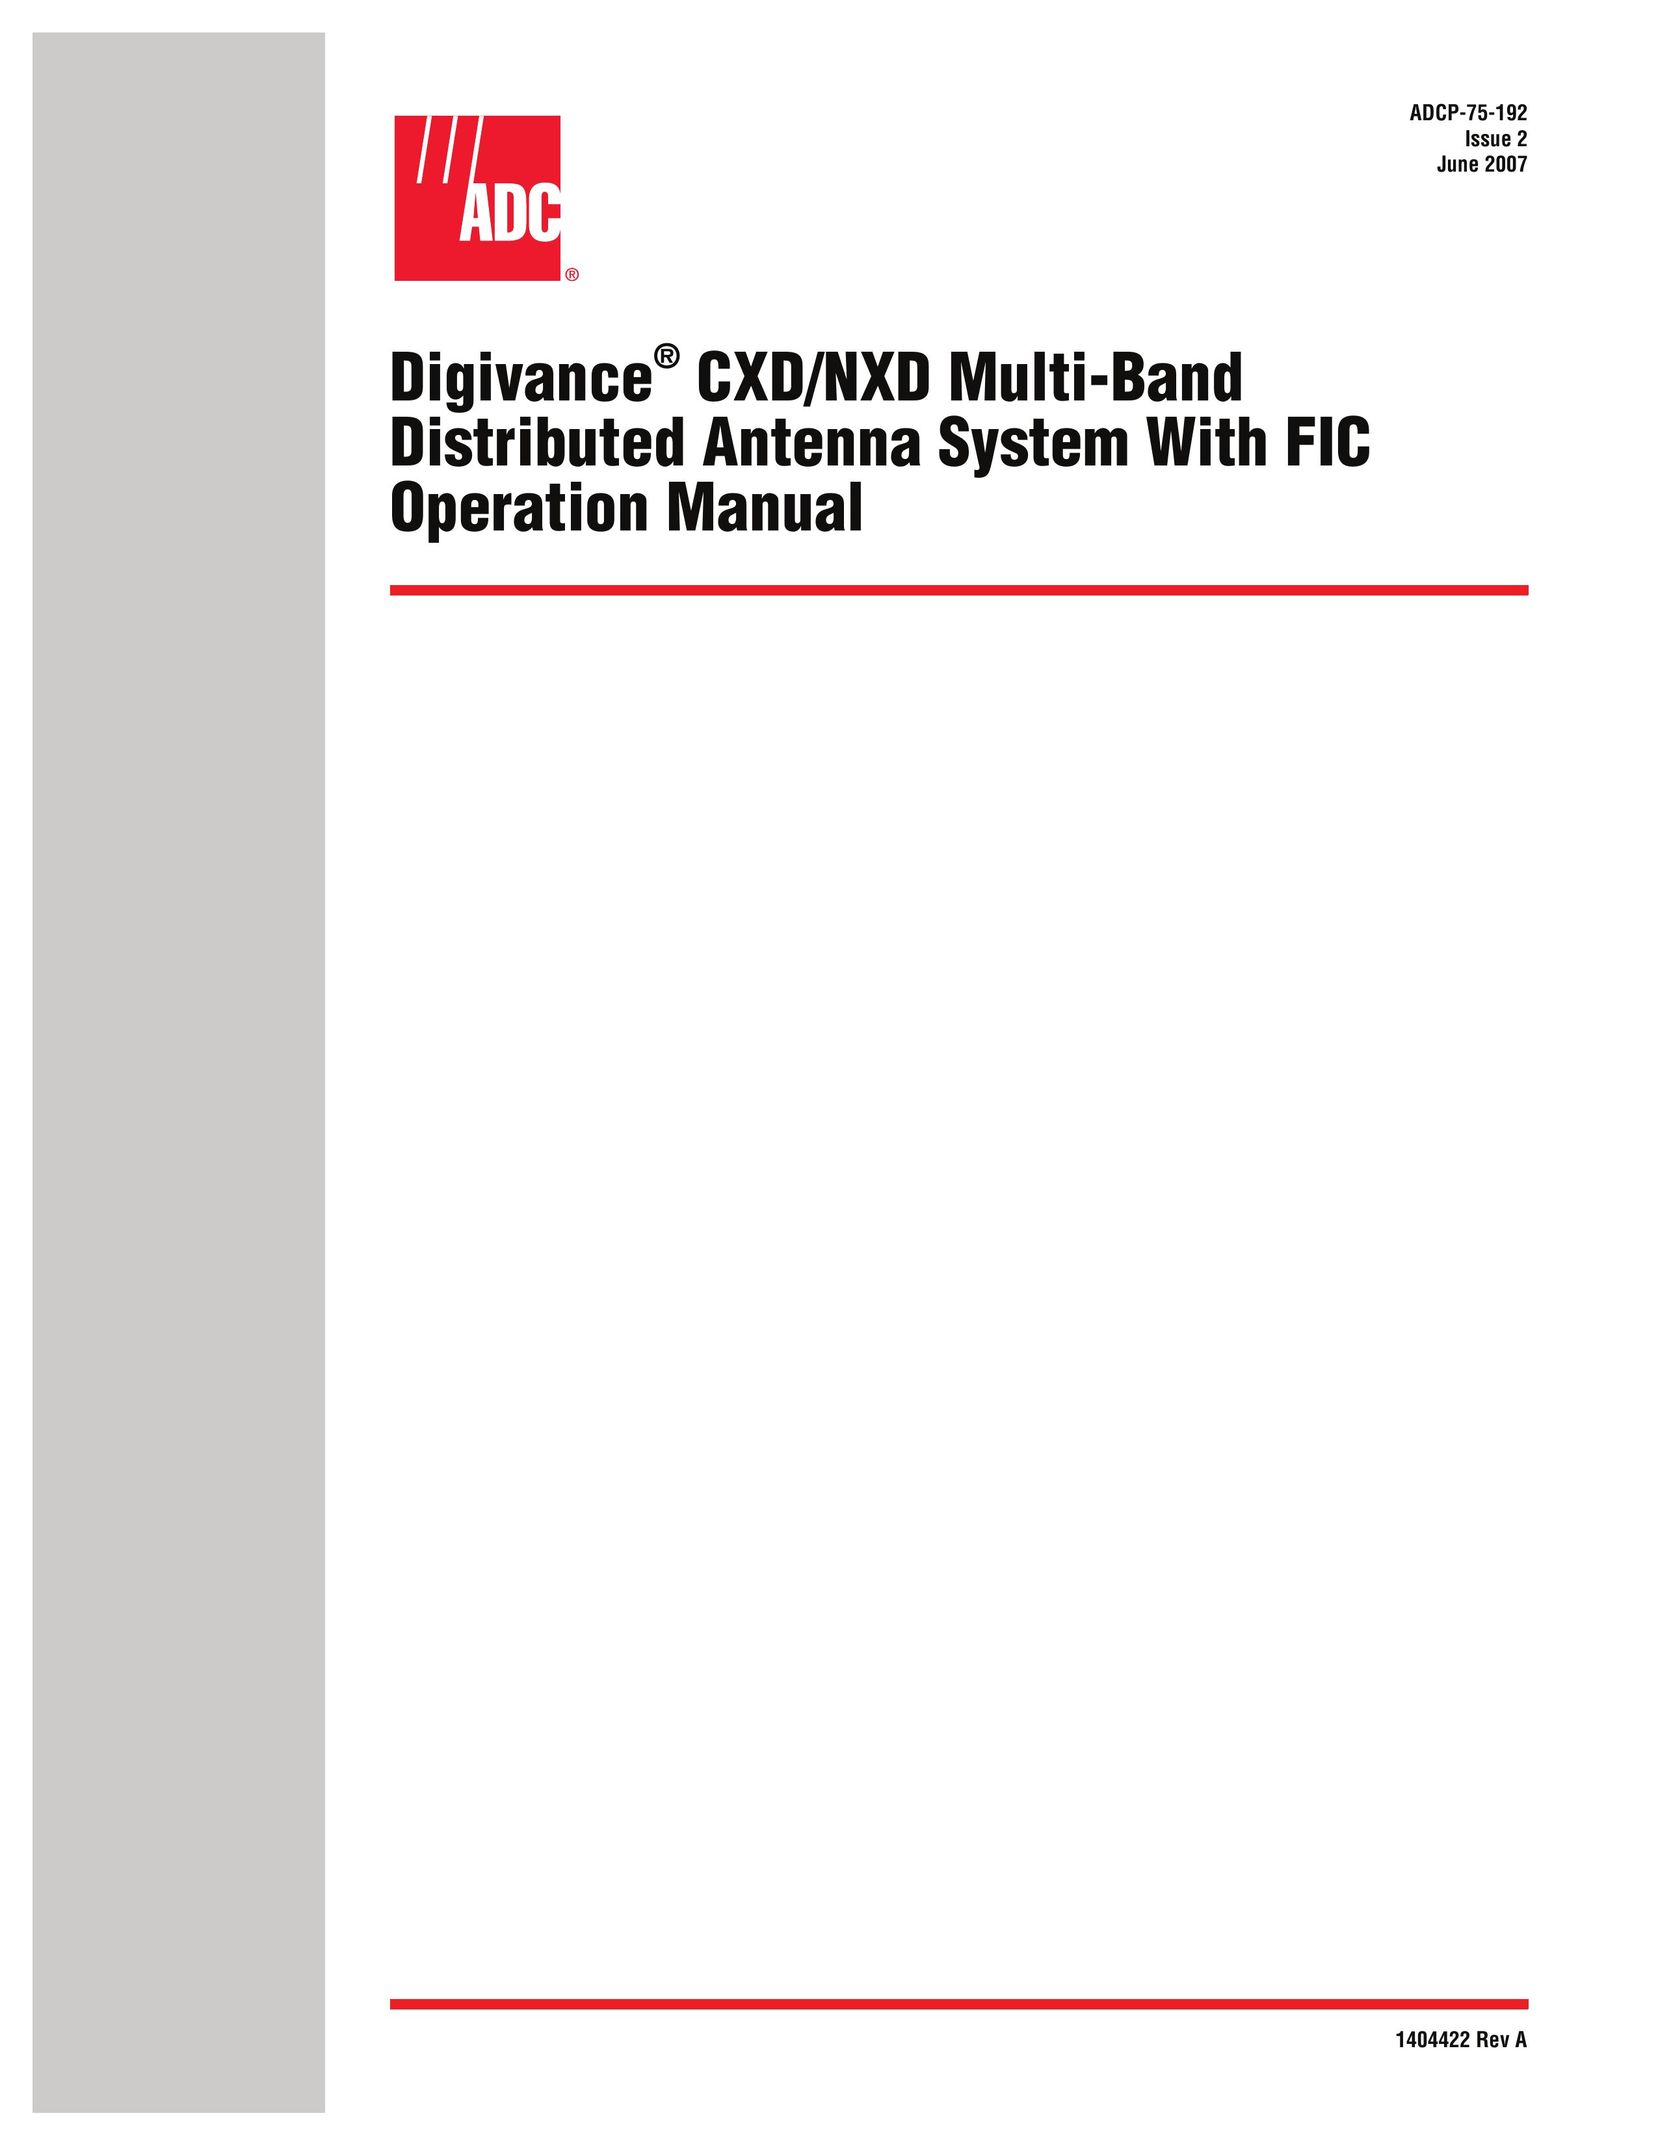 ADC 75-192 Satellite TV System User Manual